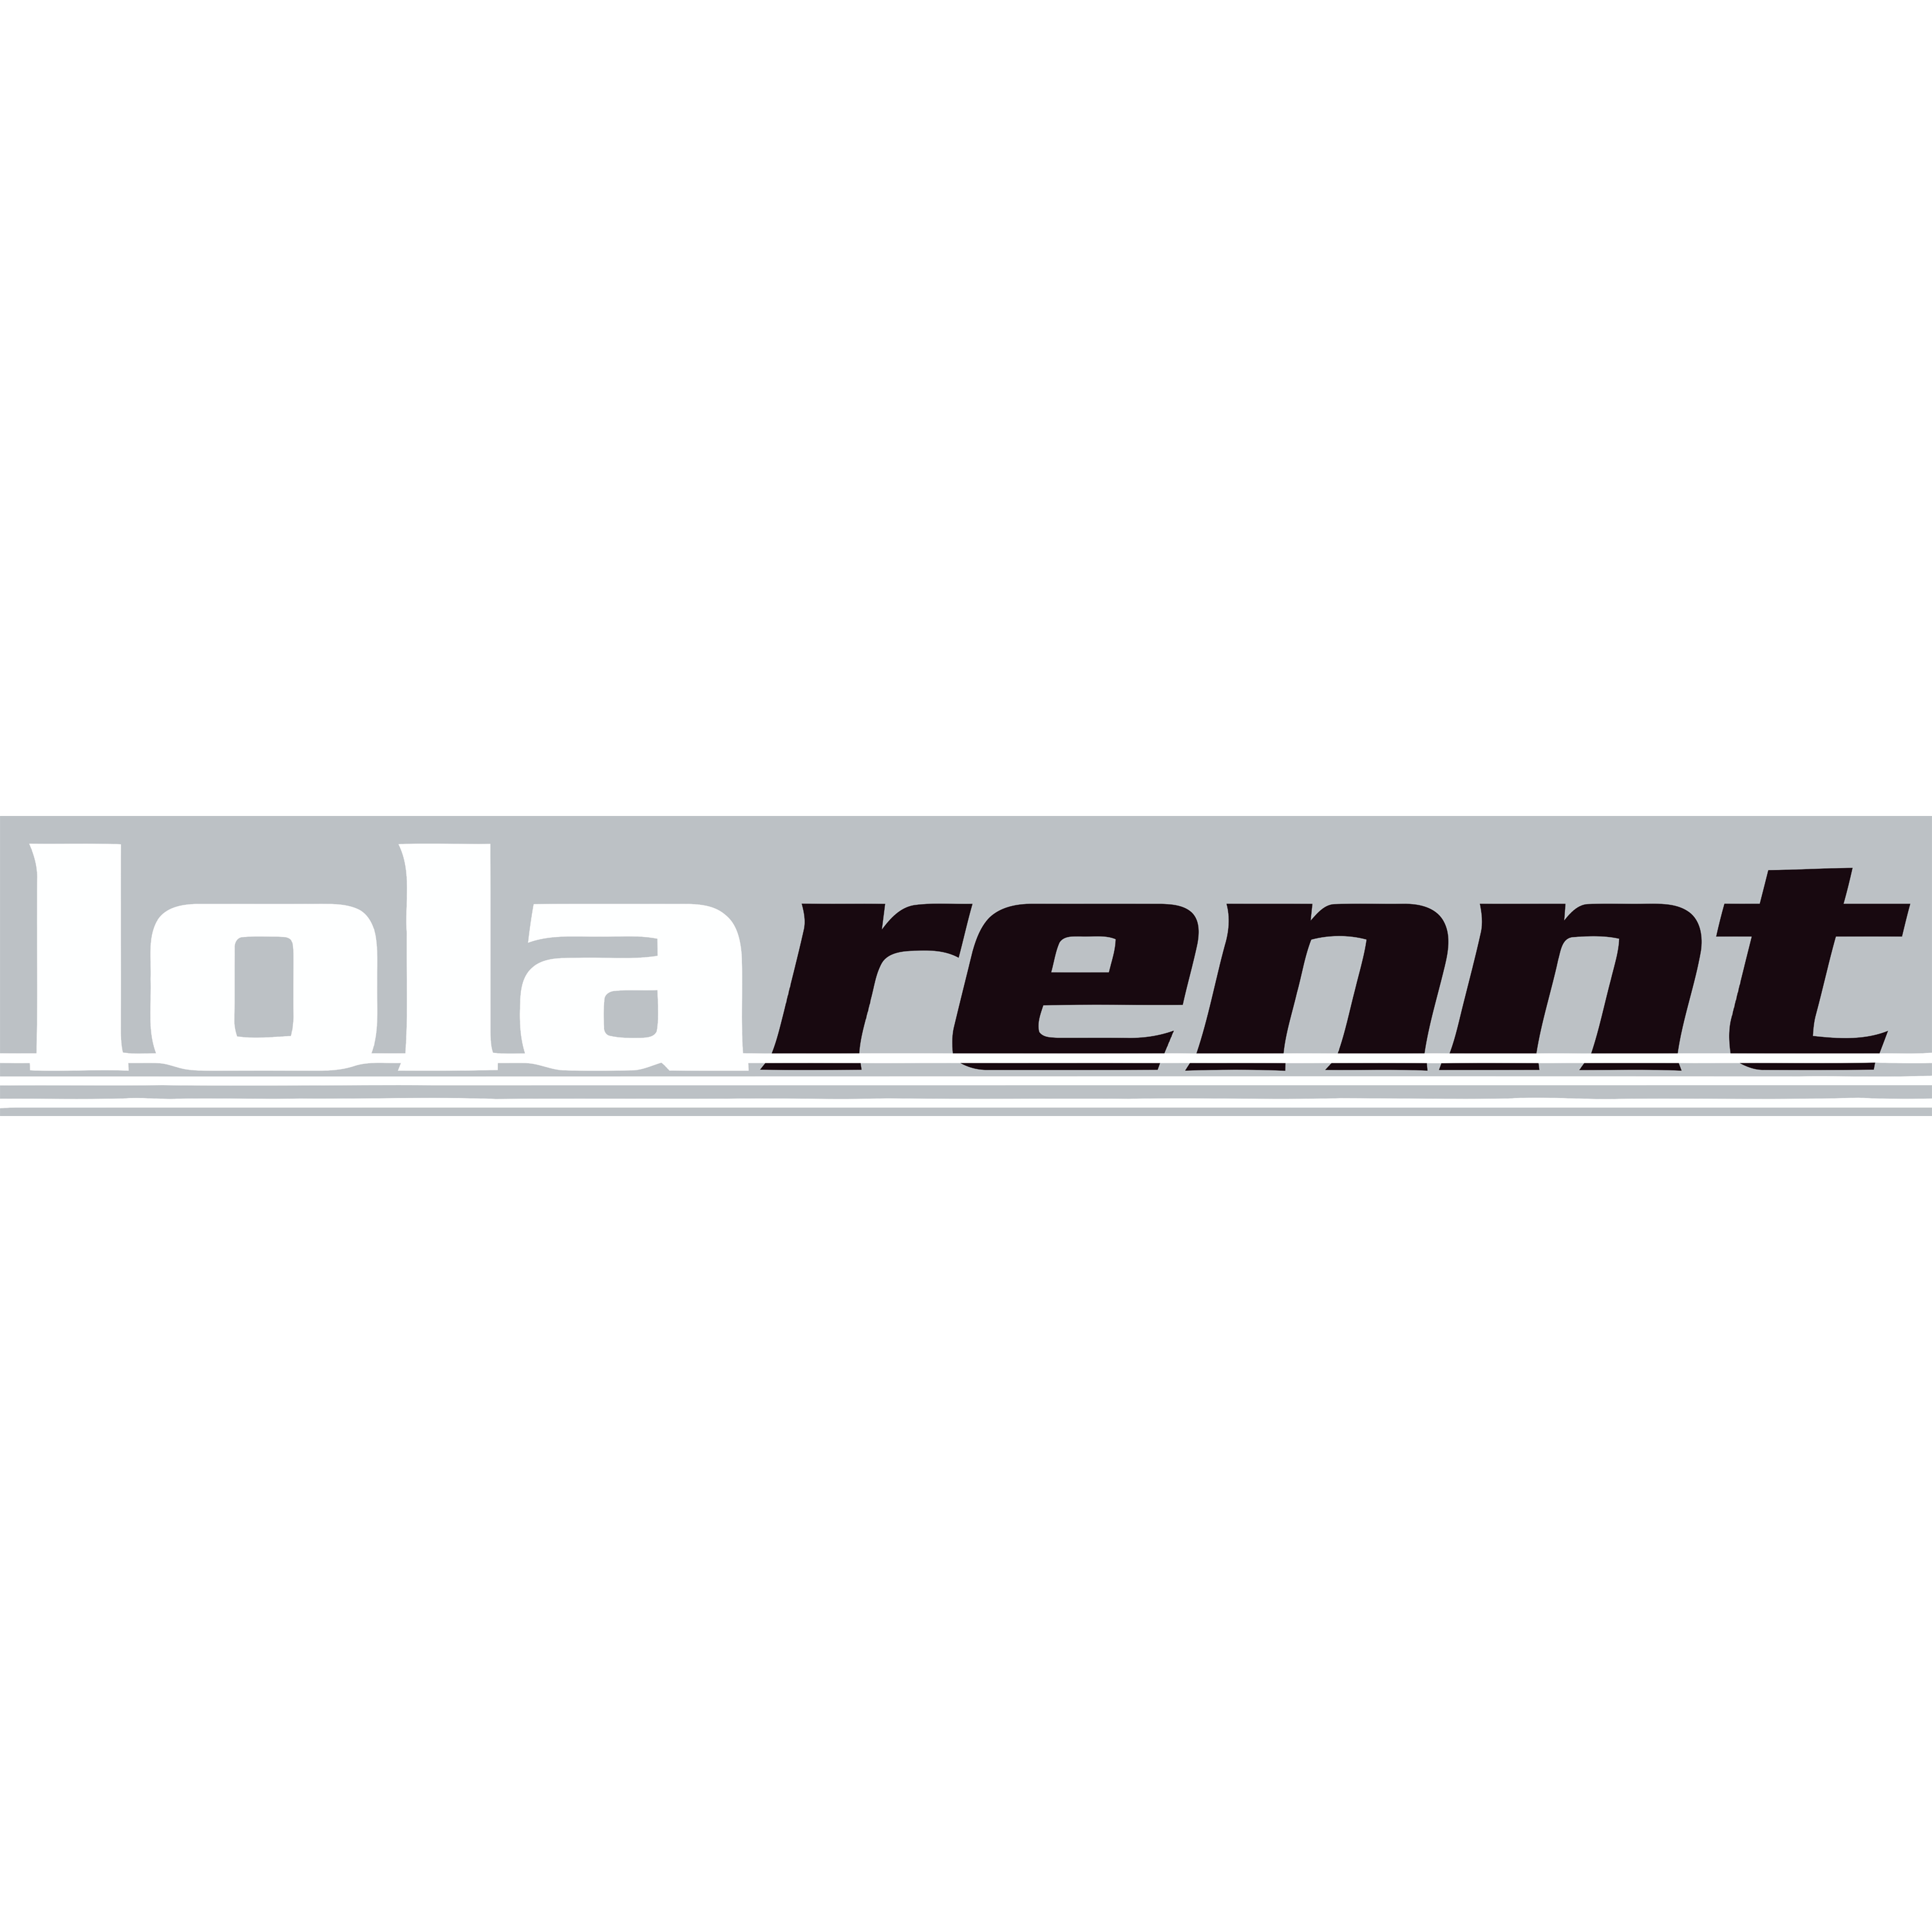 Lola Rennt Logo Transparent Image